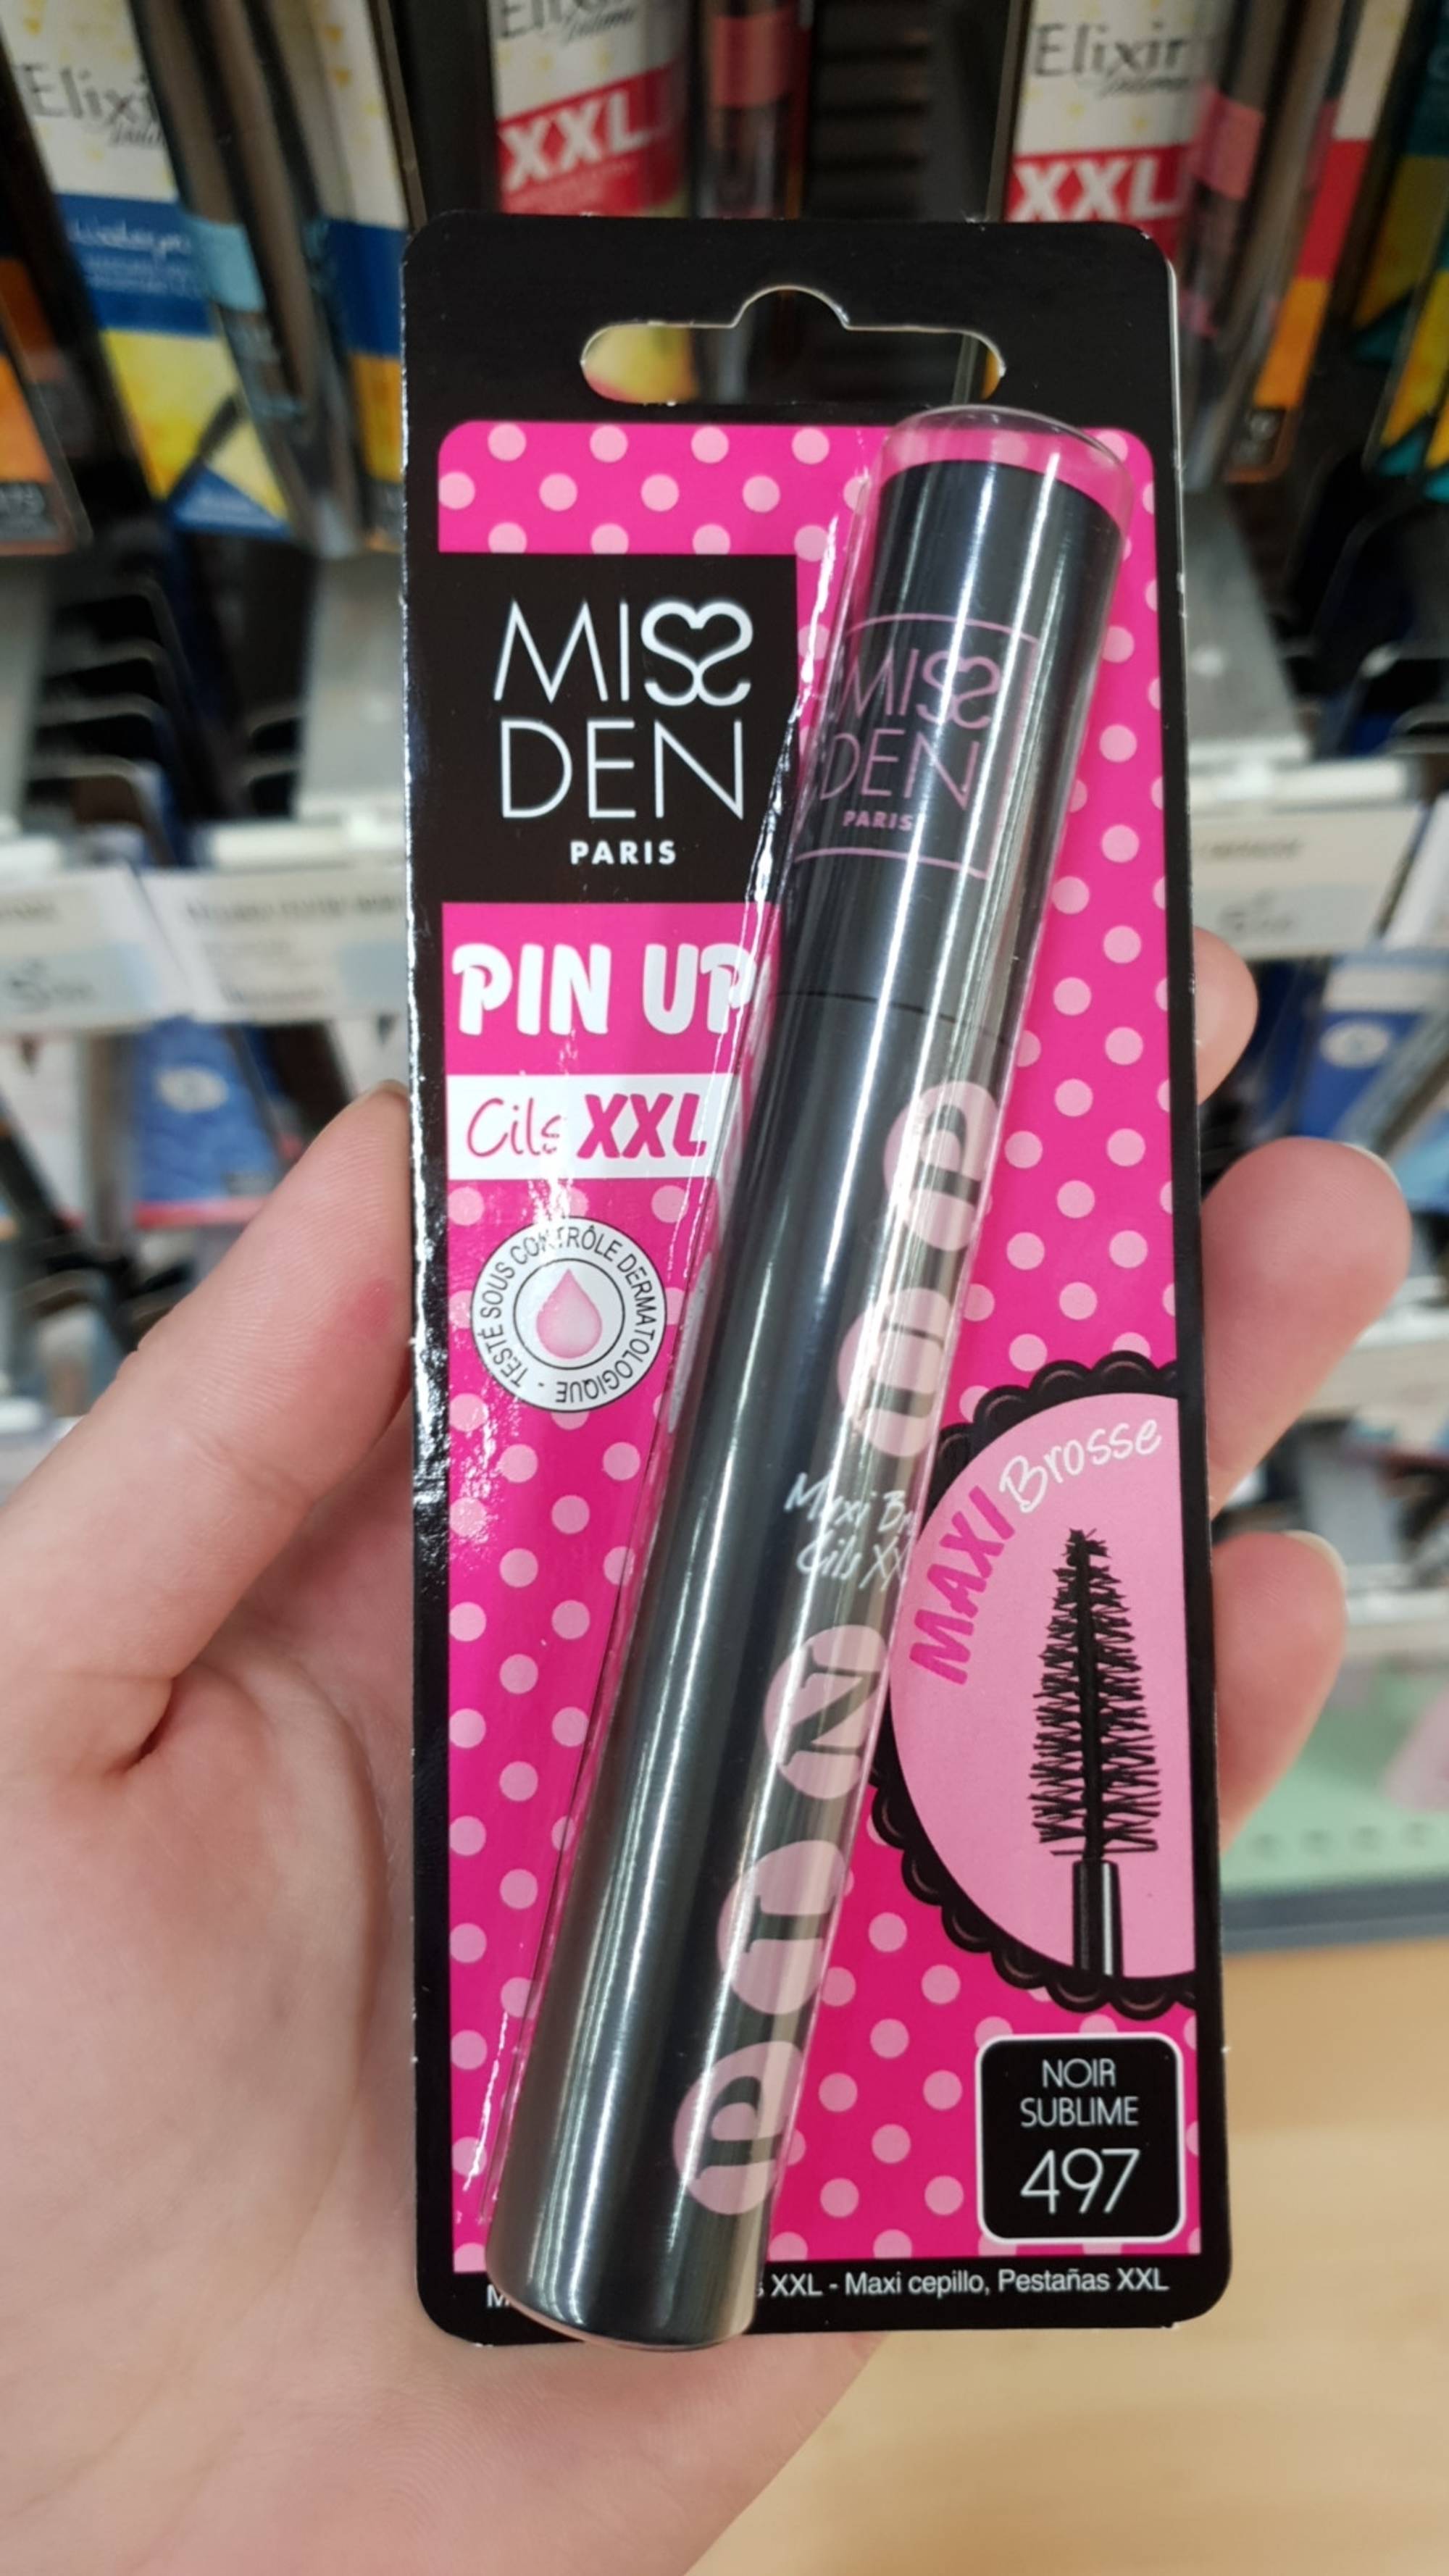 MISS DEN - Pin up - Mascara maxi brosse noir sublime 497